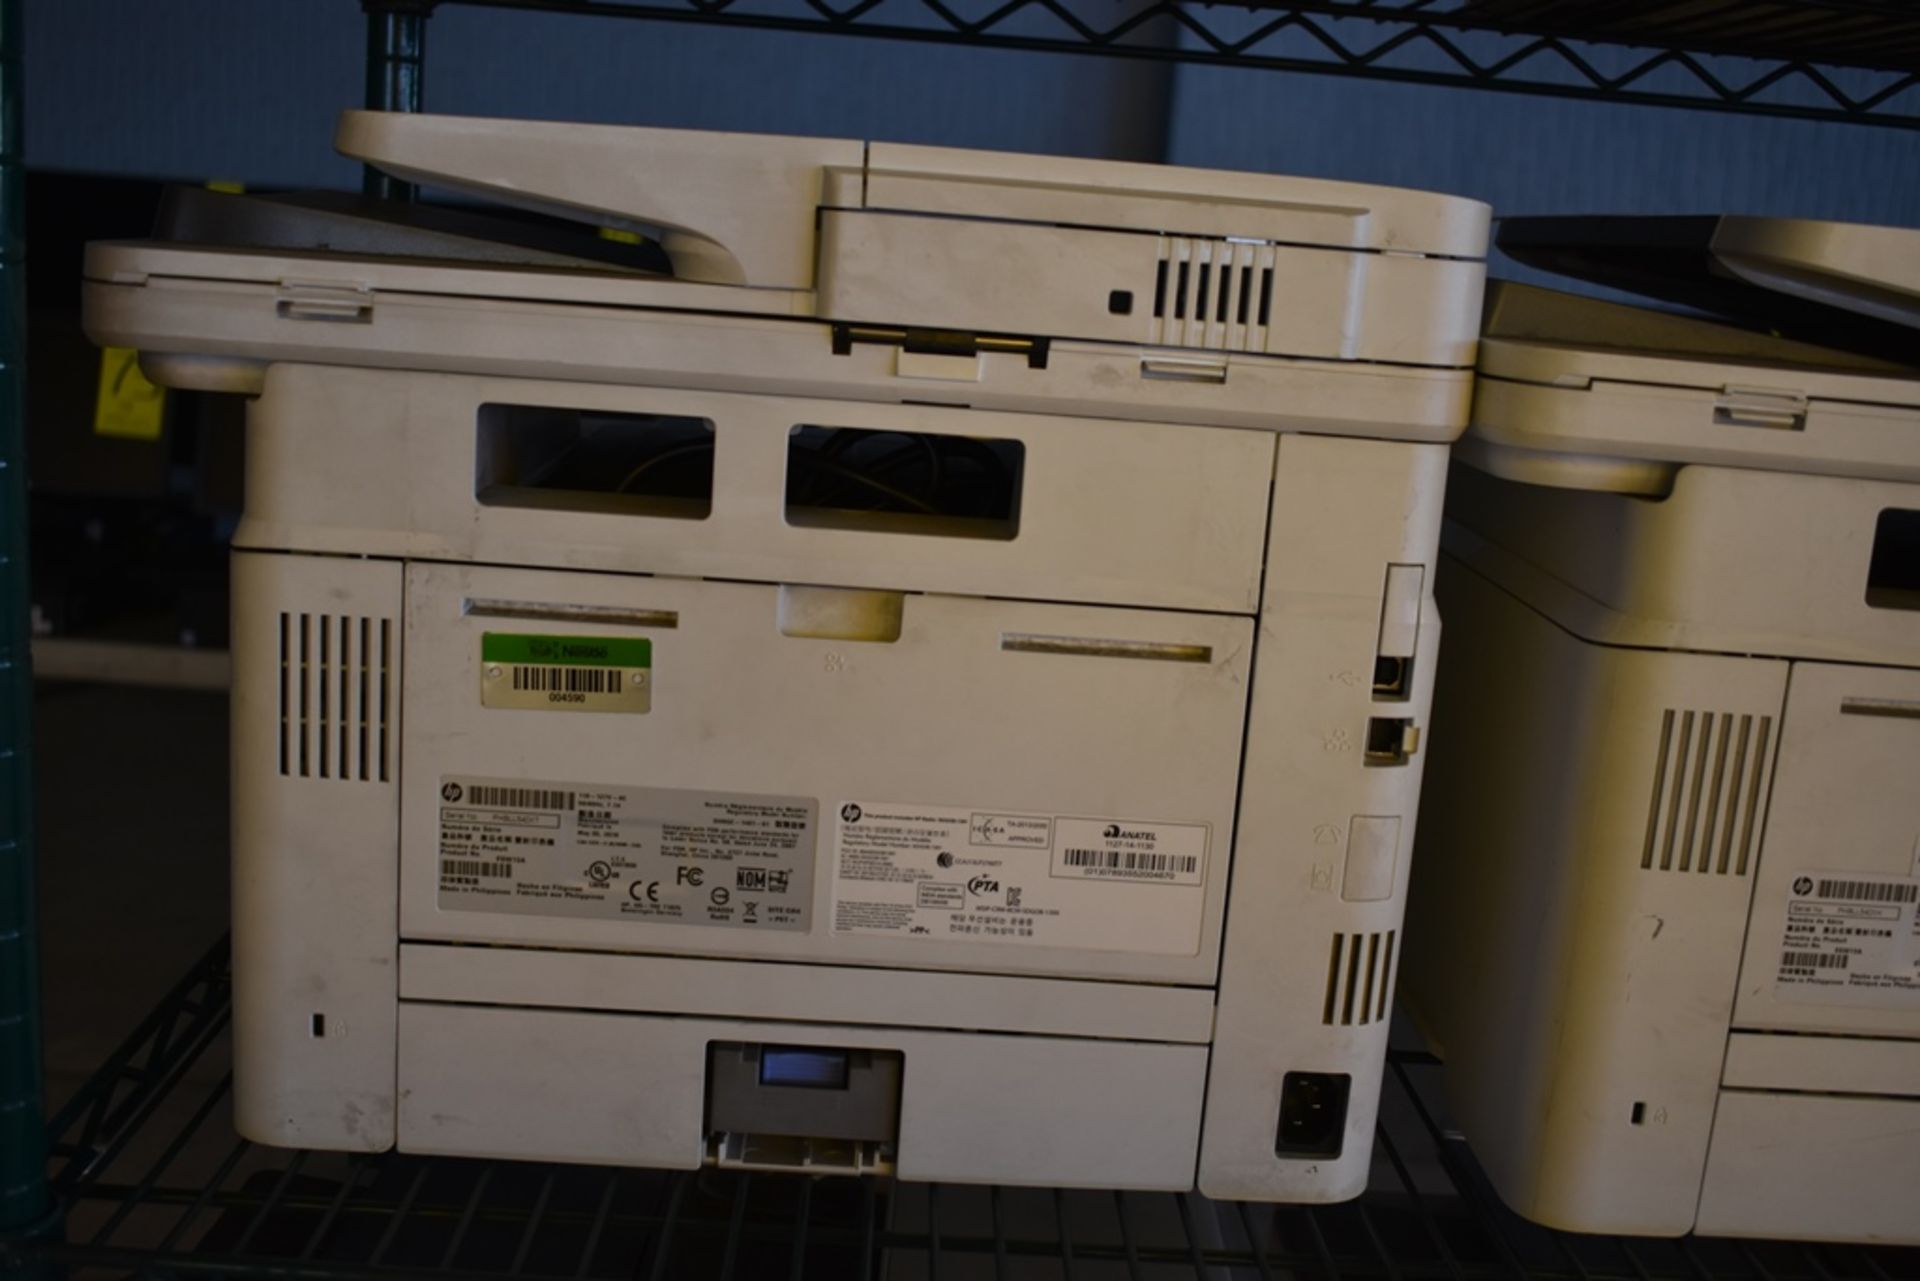 3 impresoras multifuncional marca HP, Modelo: LaserJet Pro MFP M426fdw - Image 3 of 21